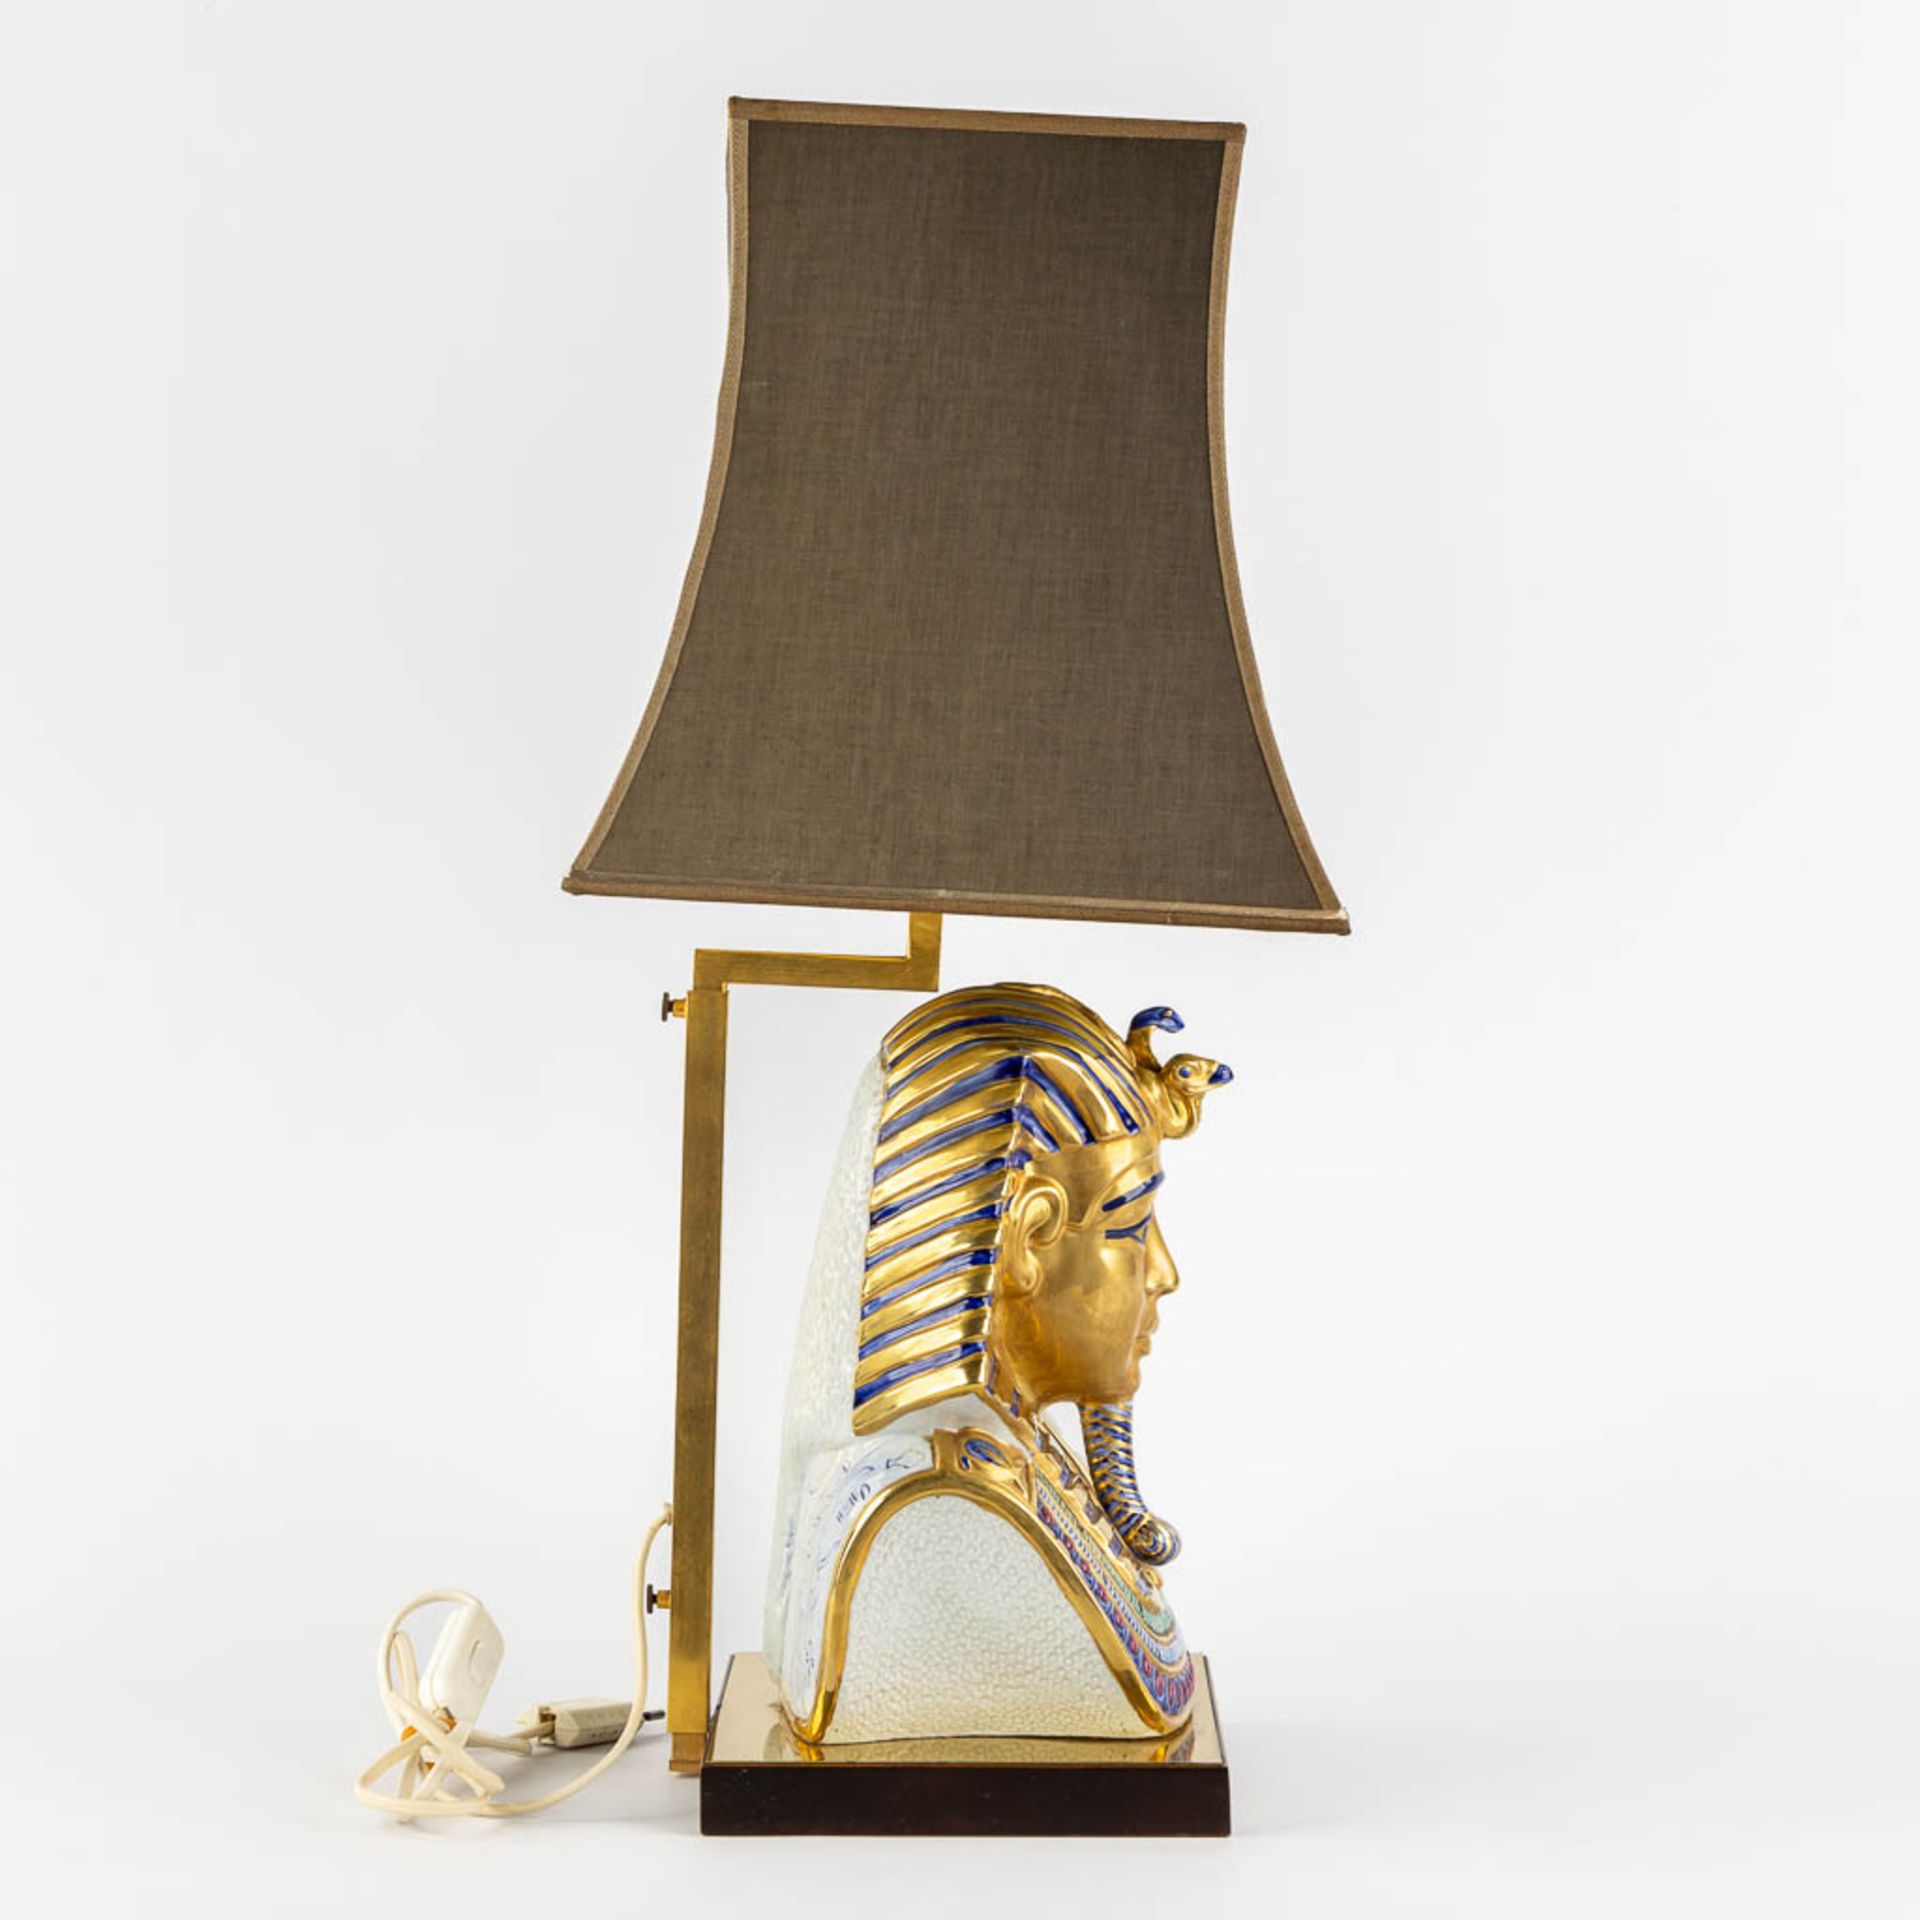 Eduoardo Tasca, Capodimonte, A Tutanchamun table lamp. (L:19 x W:25 x H:38 cm) - Image 6 of 10